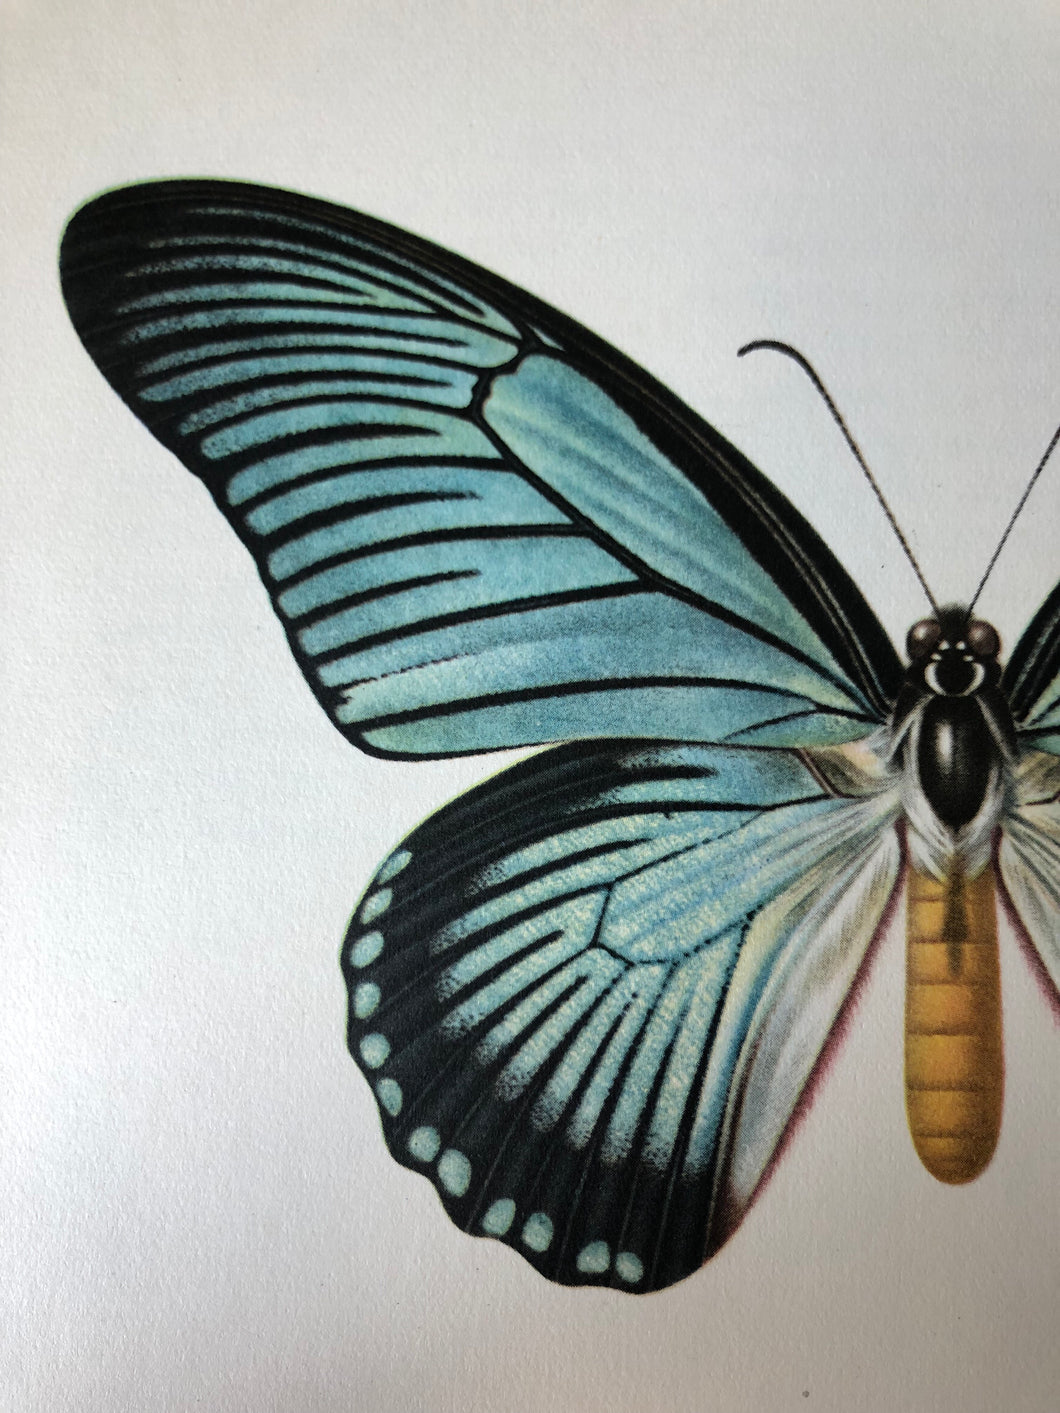 Original Butterfly Bookplate, Papilio Zalmoxis